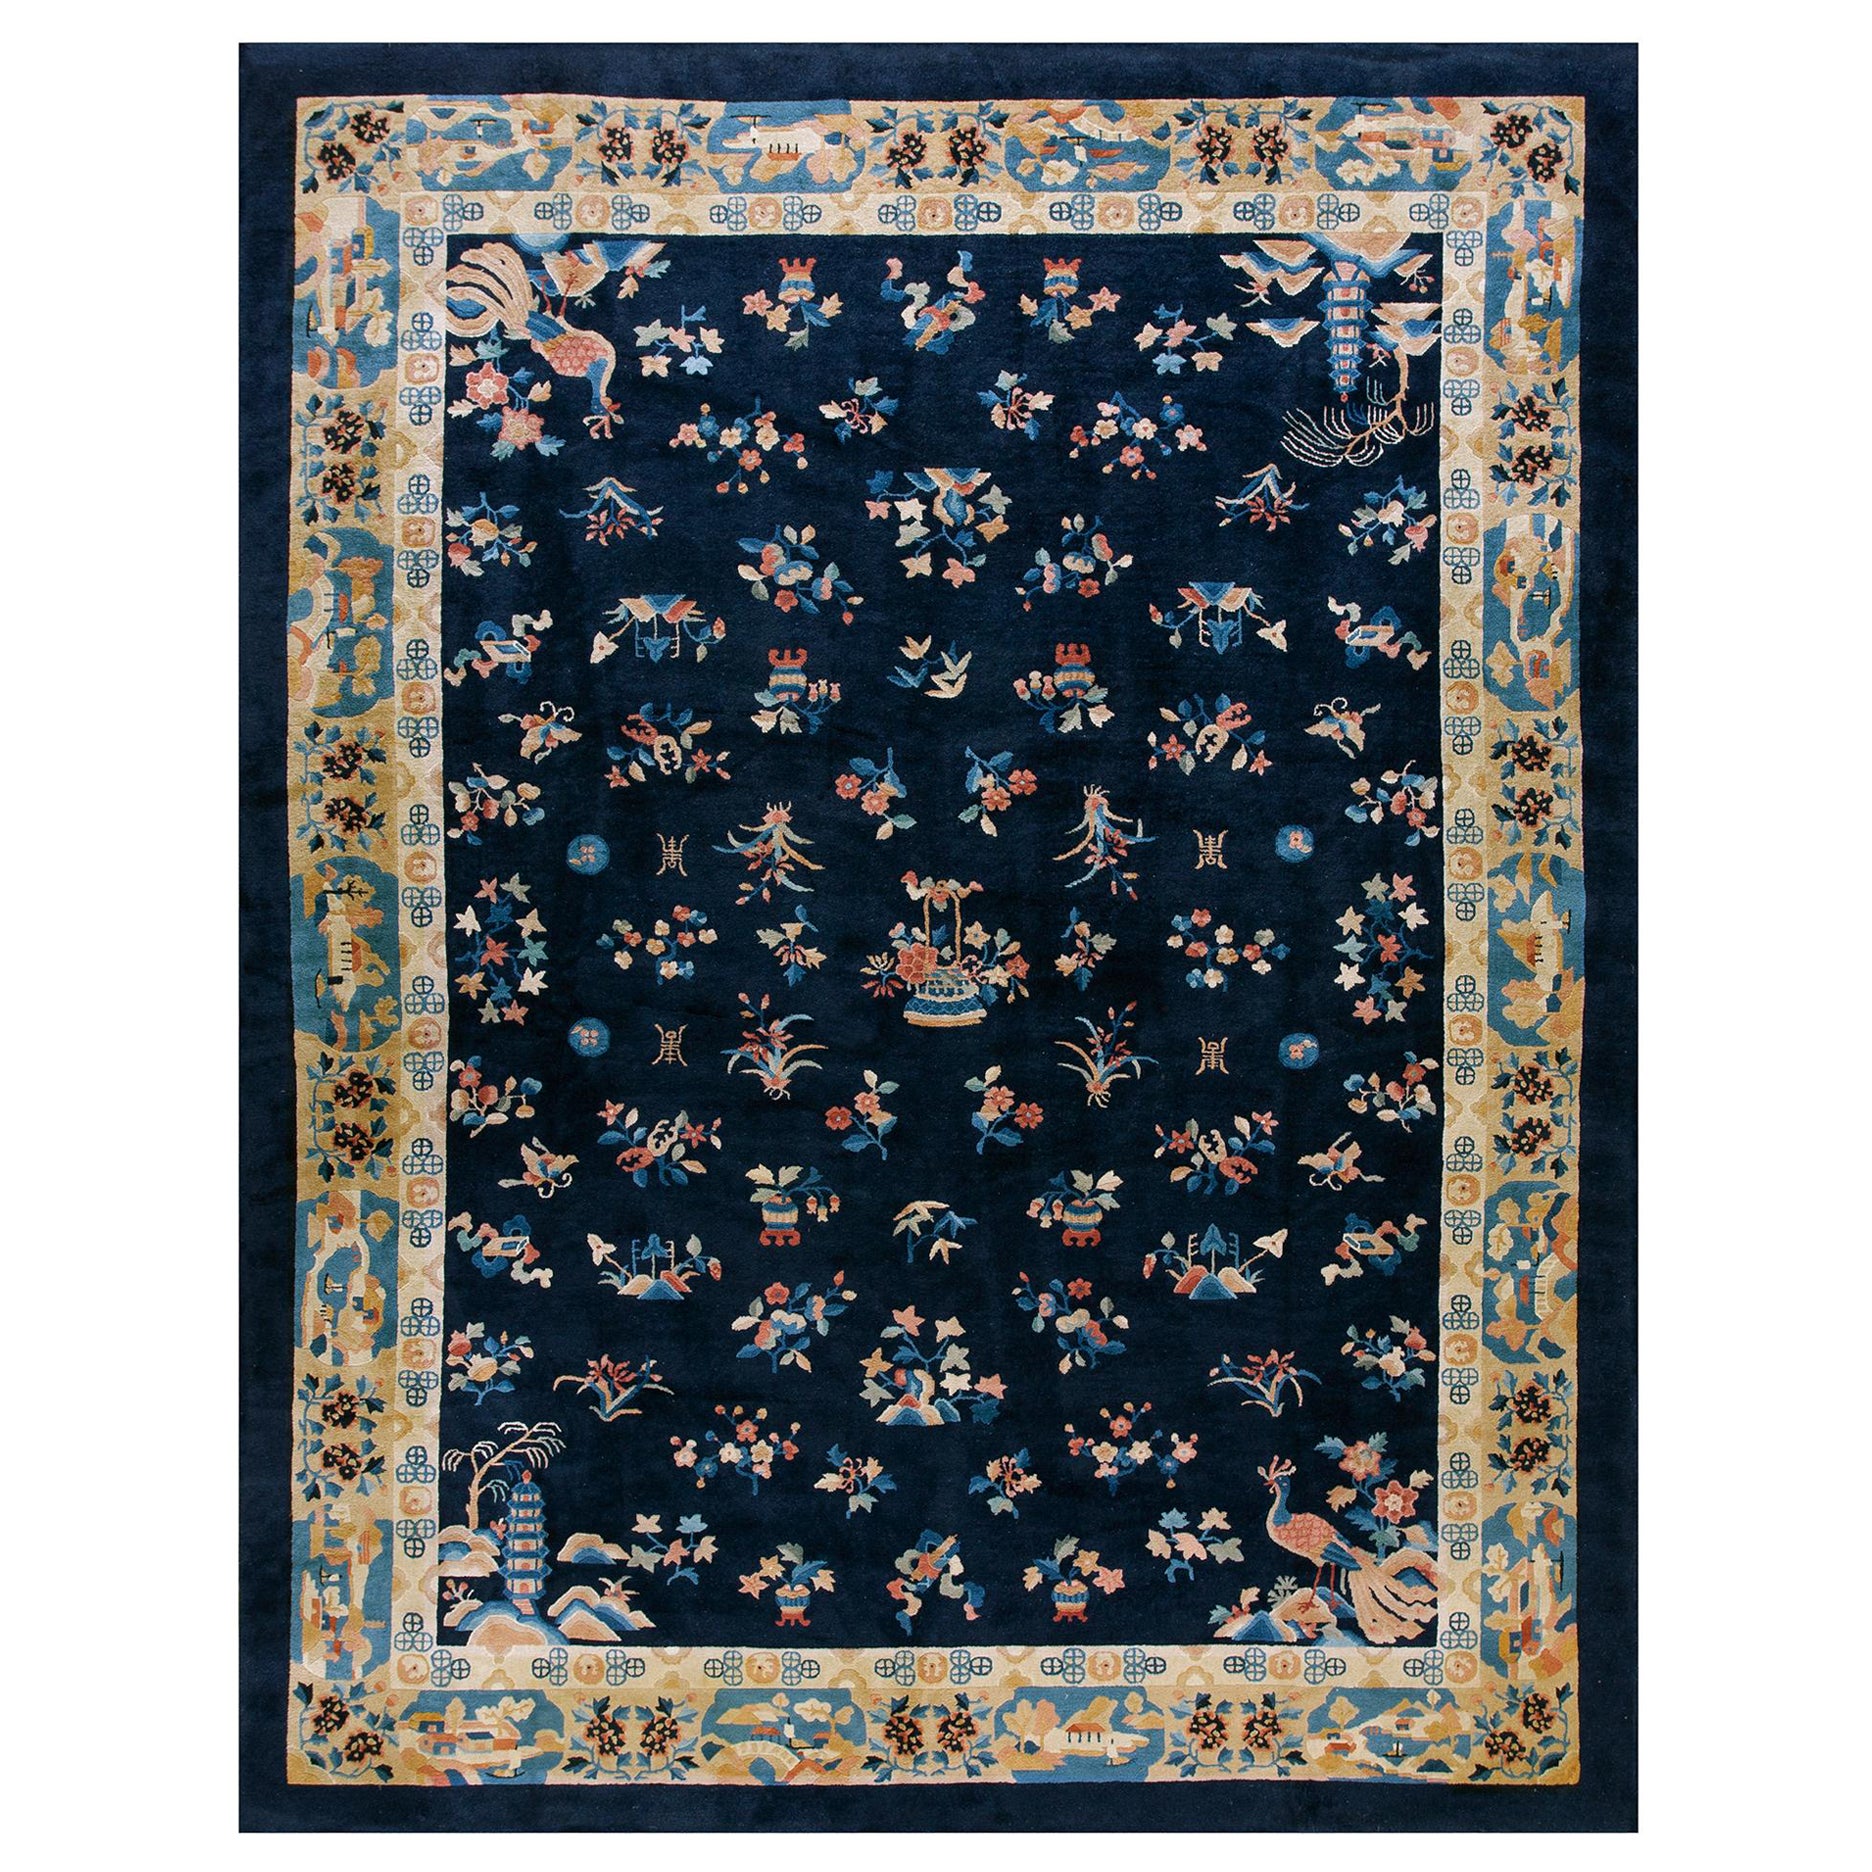 Early 20th Century Chinese Peking Carpet ( 9'2'' x 11'8'' - 280 x 355 )